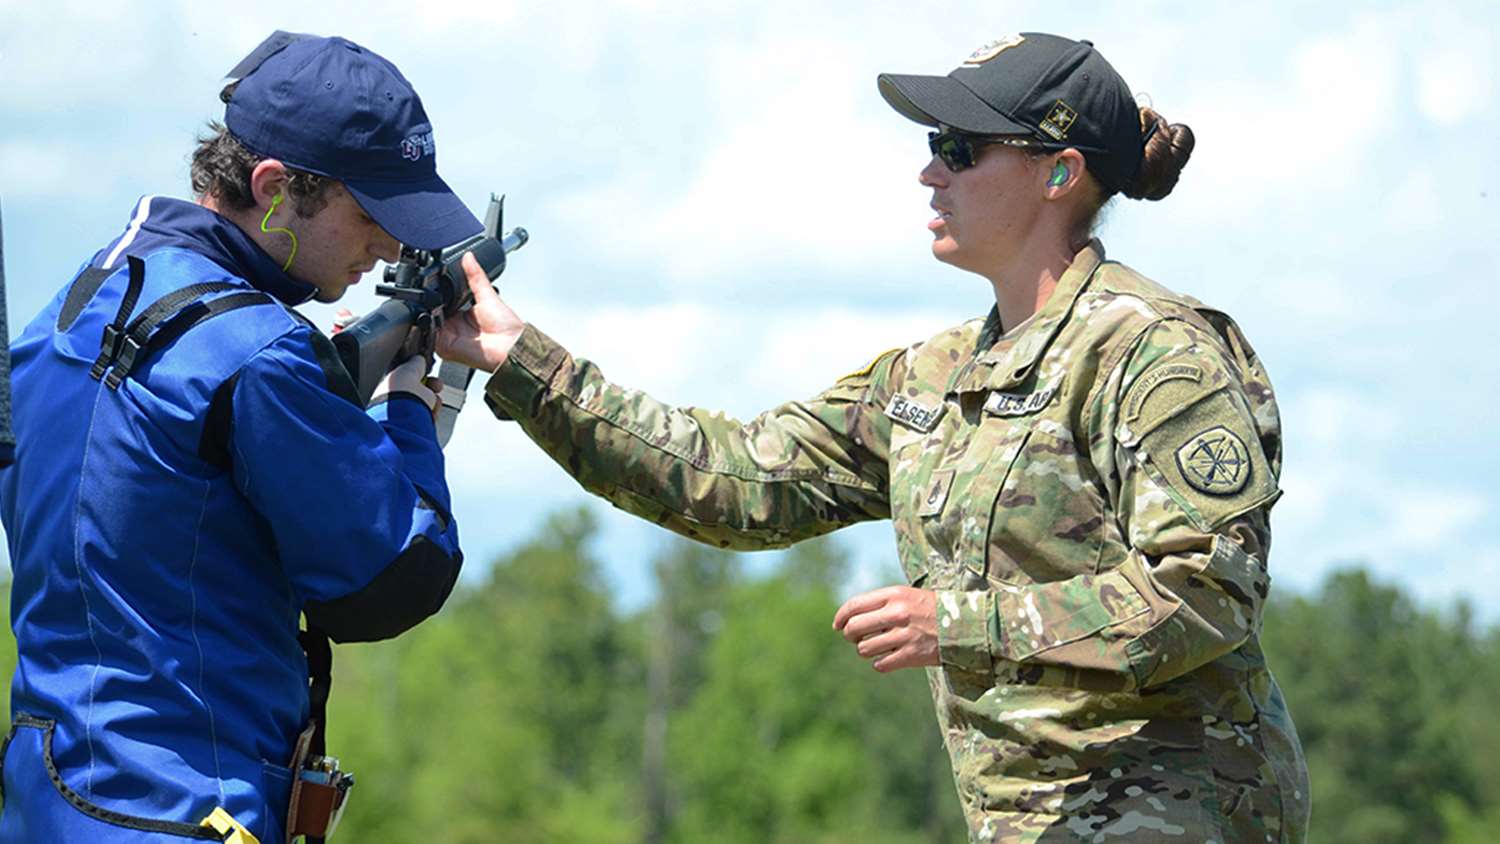 Liberty University Rifle Team Training at Camp Butner SAFS